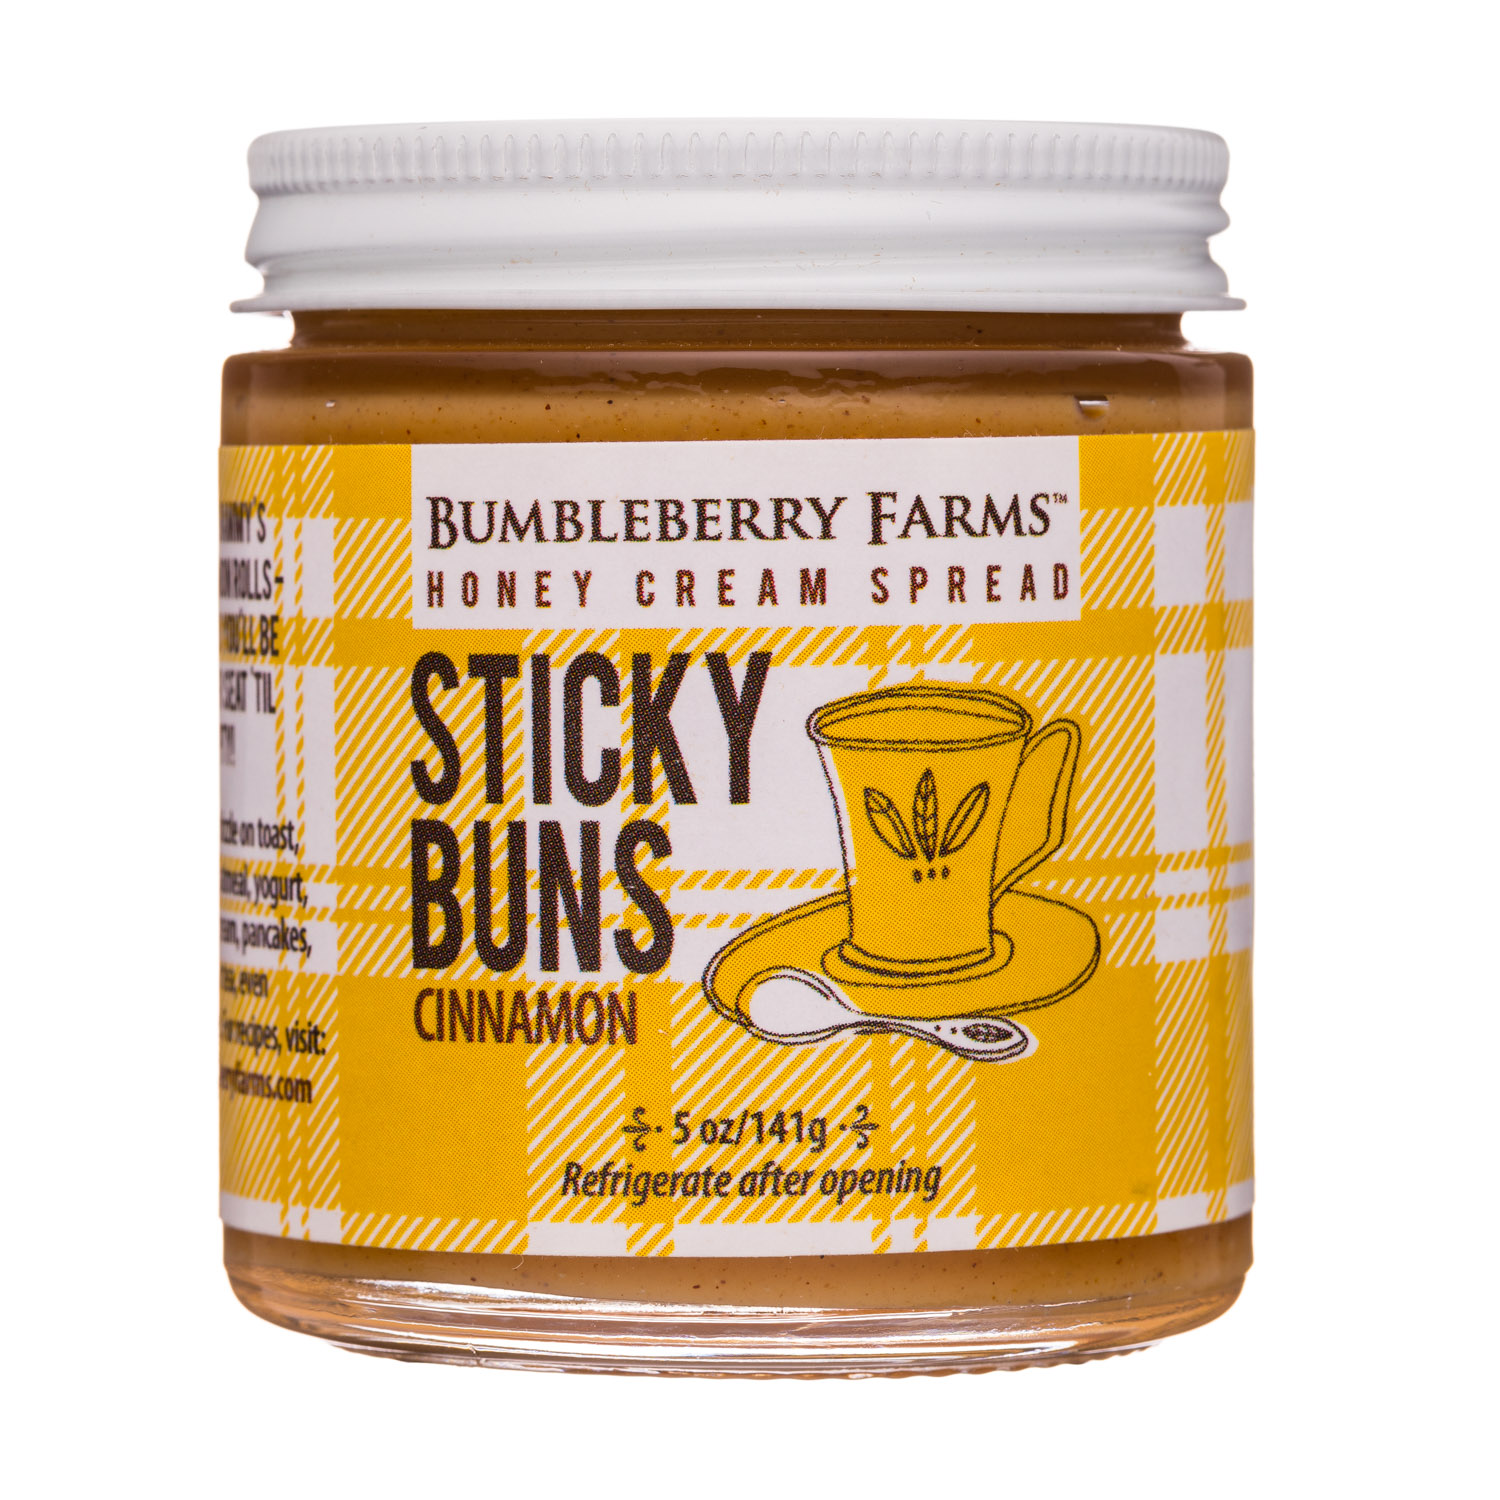 Sticky Buns Cinnamon